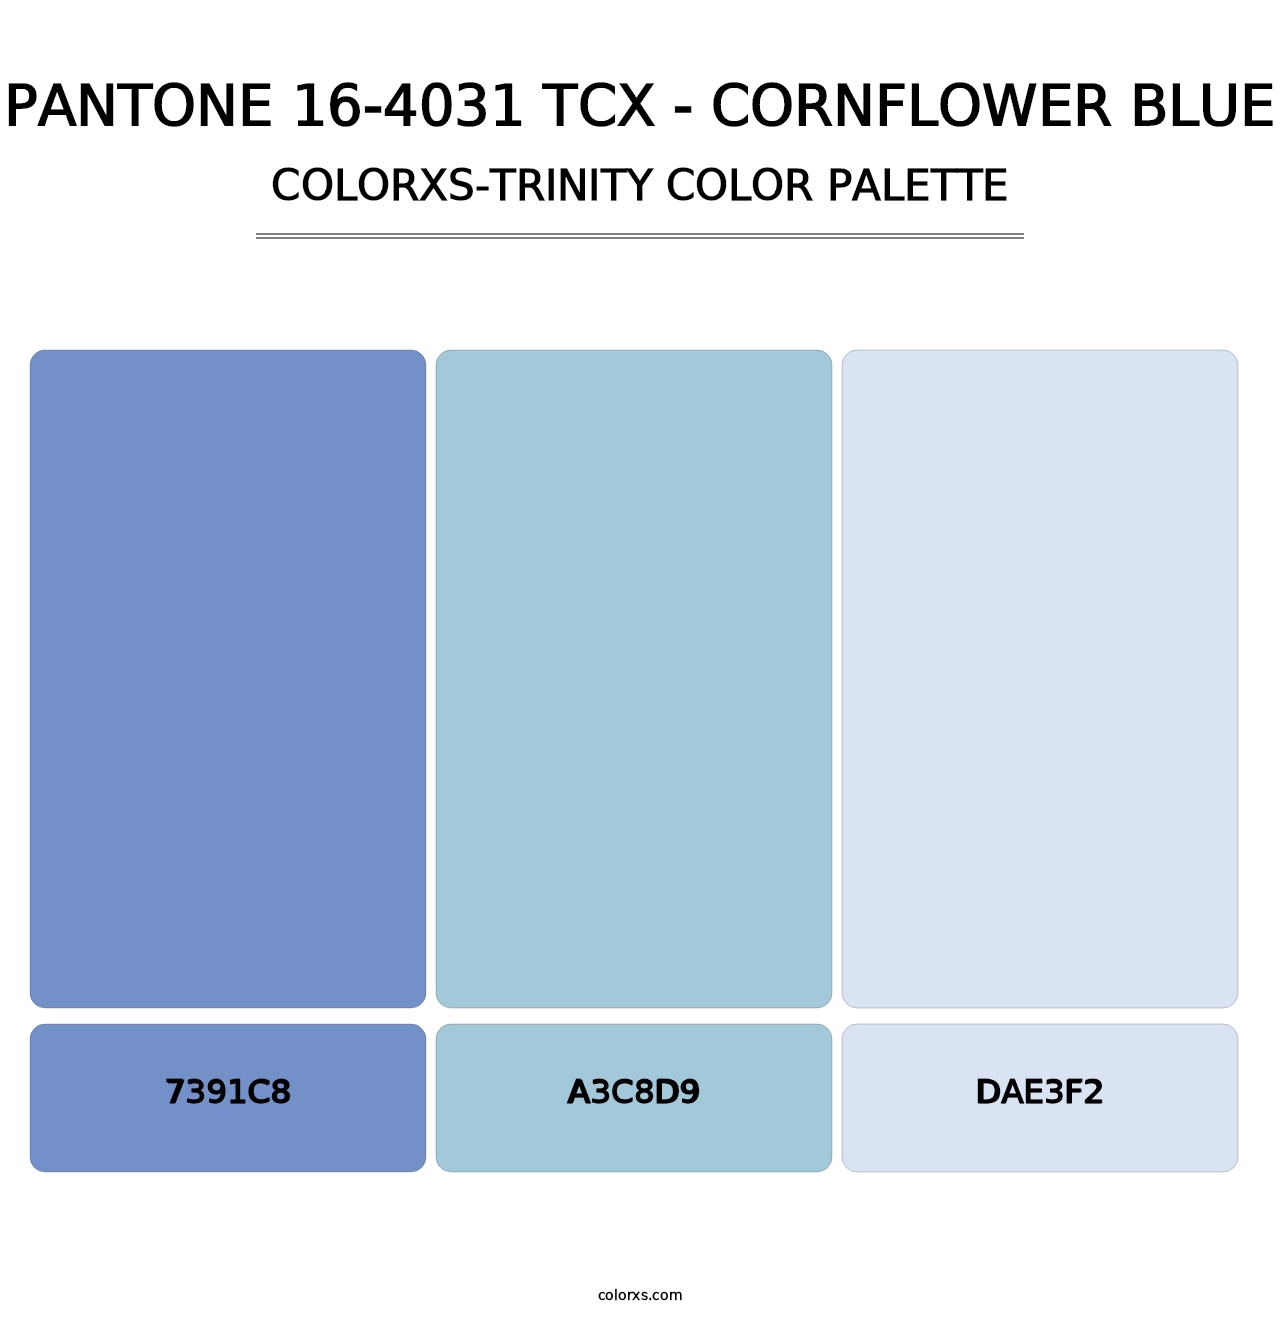 PANTONE 16-4031 TCX - Cornflower Blue - Colorxs Trinity Palette